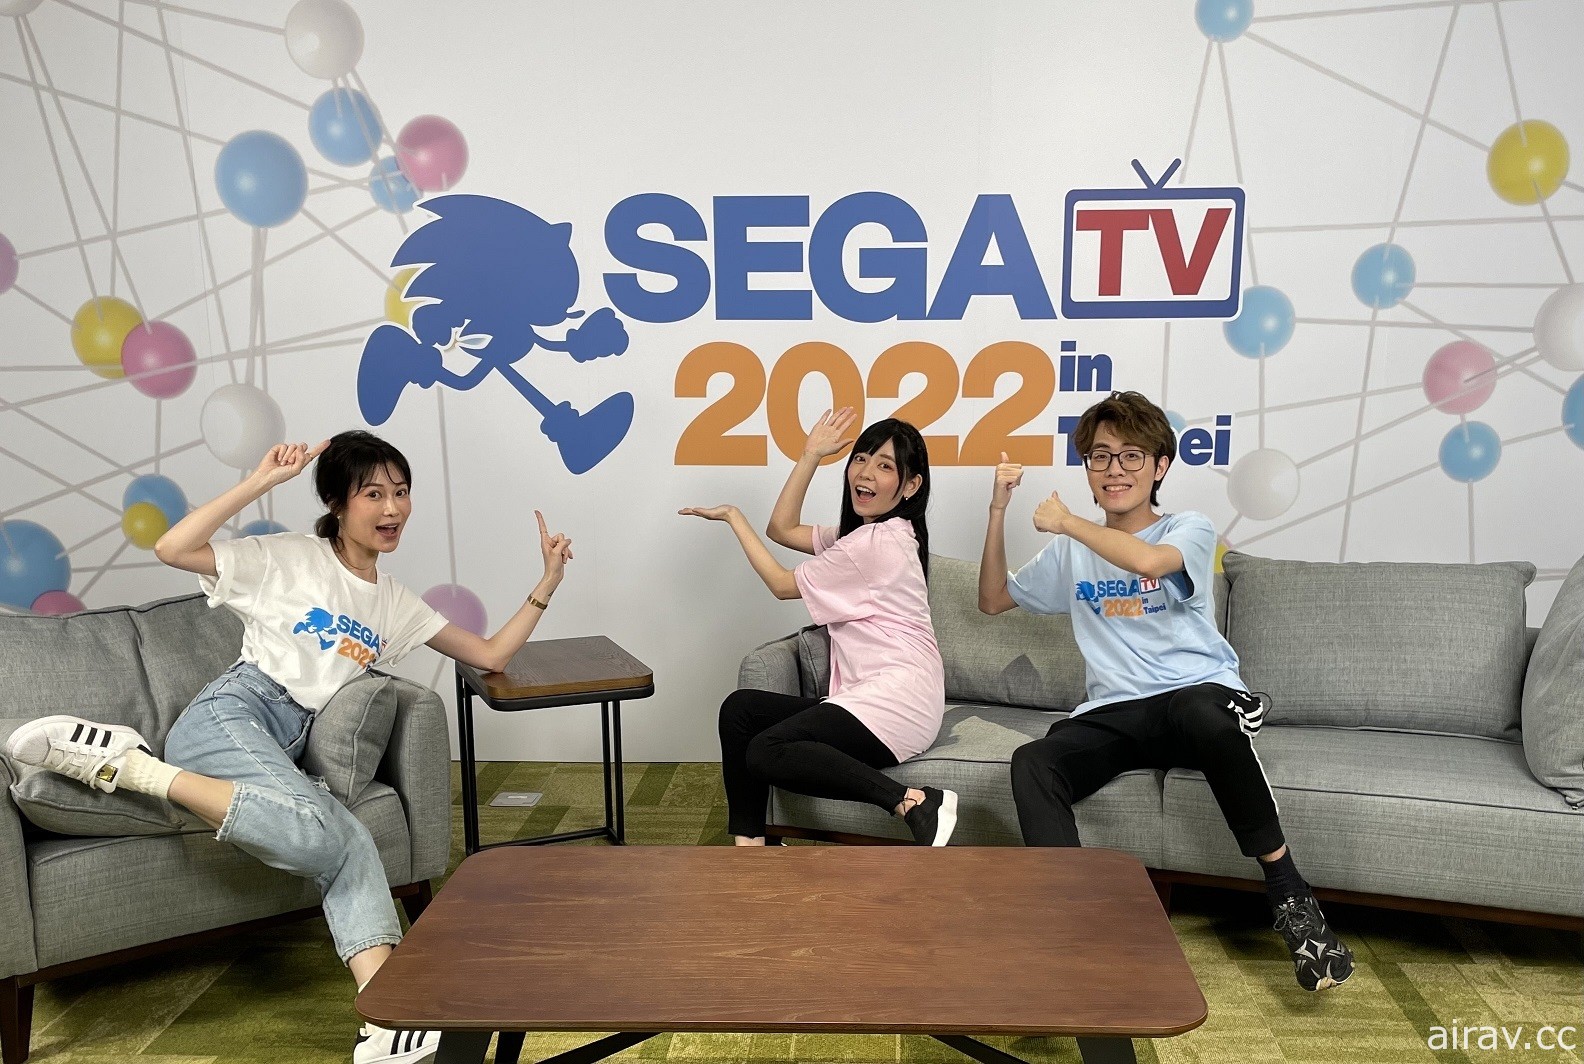 「SEGA TV 2022 in Taipei」直播節目重點回顧 人中之龍、索尼克團隊親自上陣